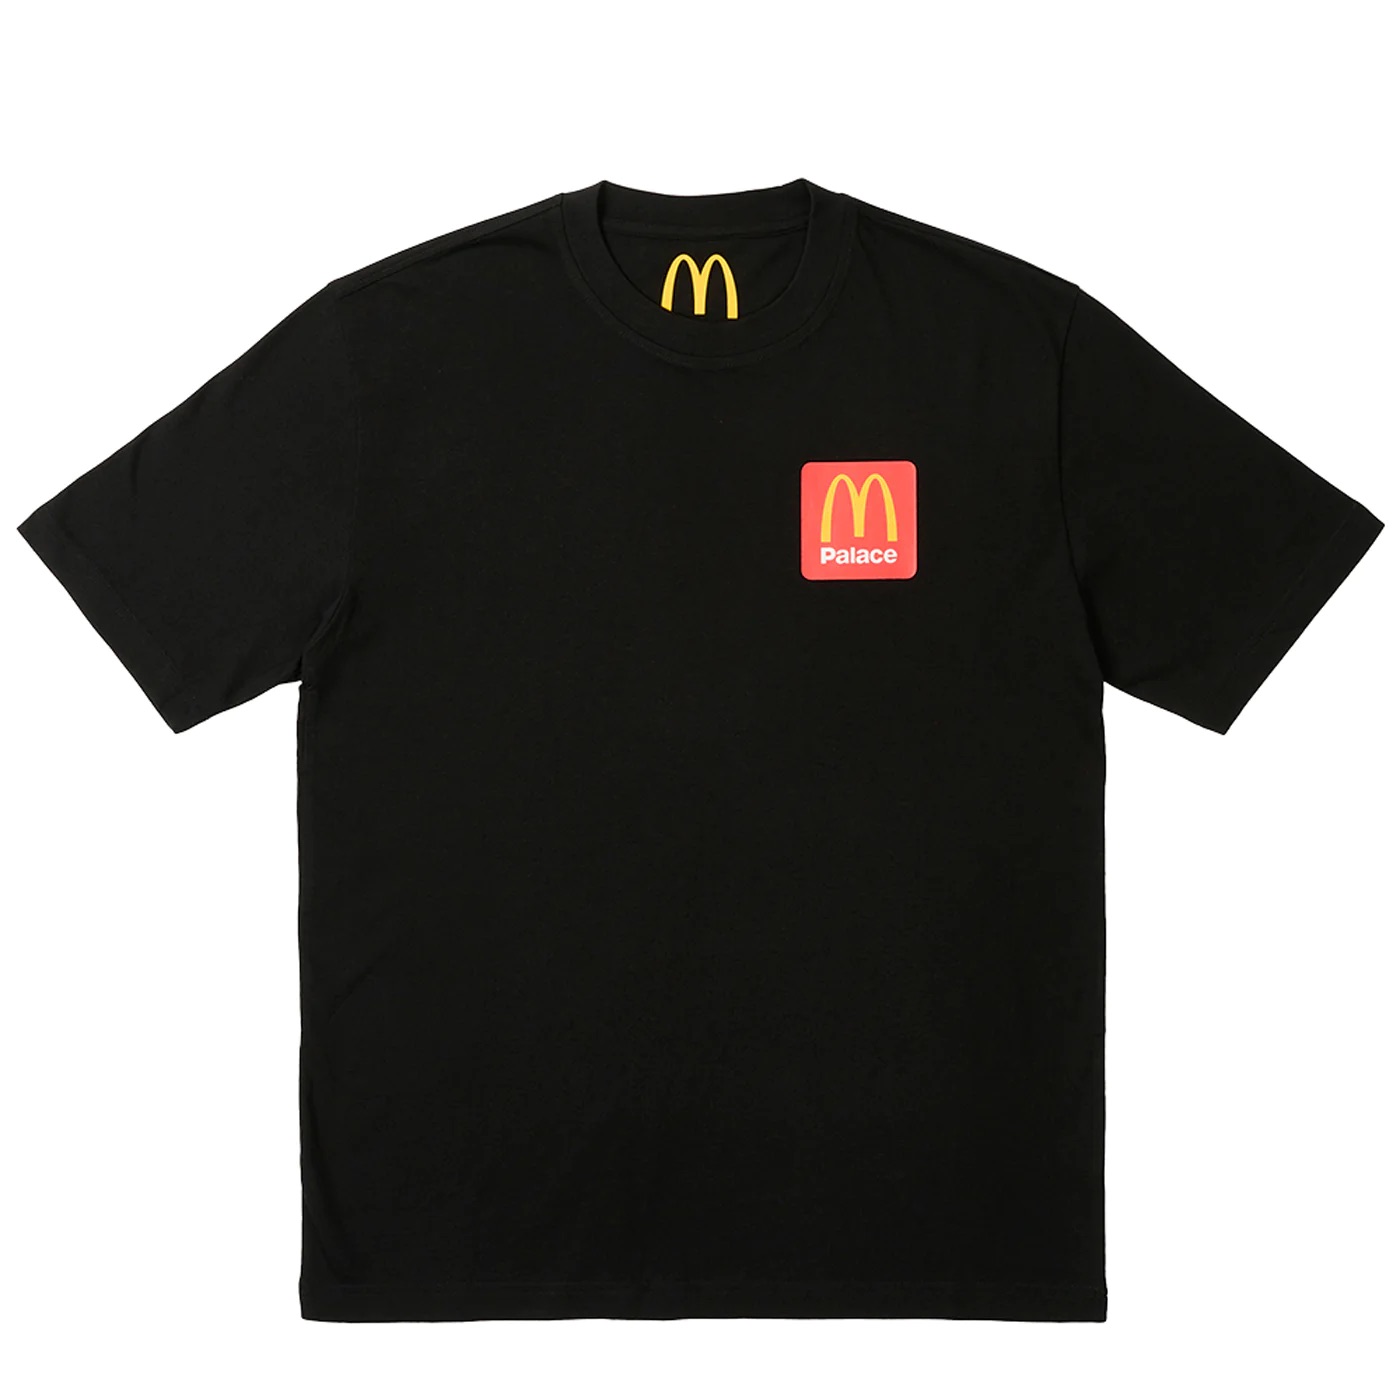 Palace Mcdonald's Description T-Shirt 2 Black - Palace McDonalds 